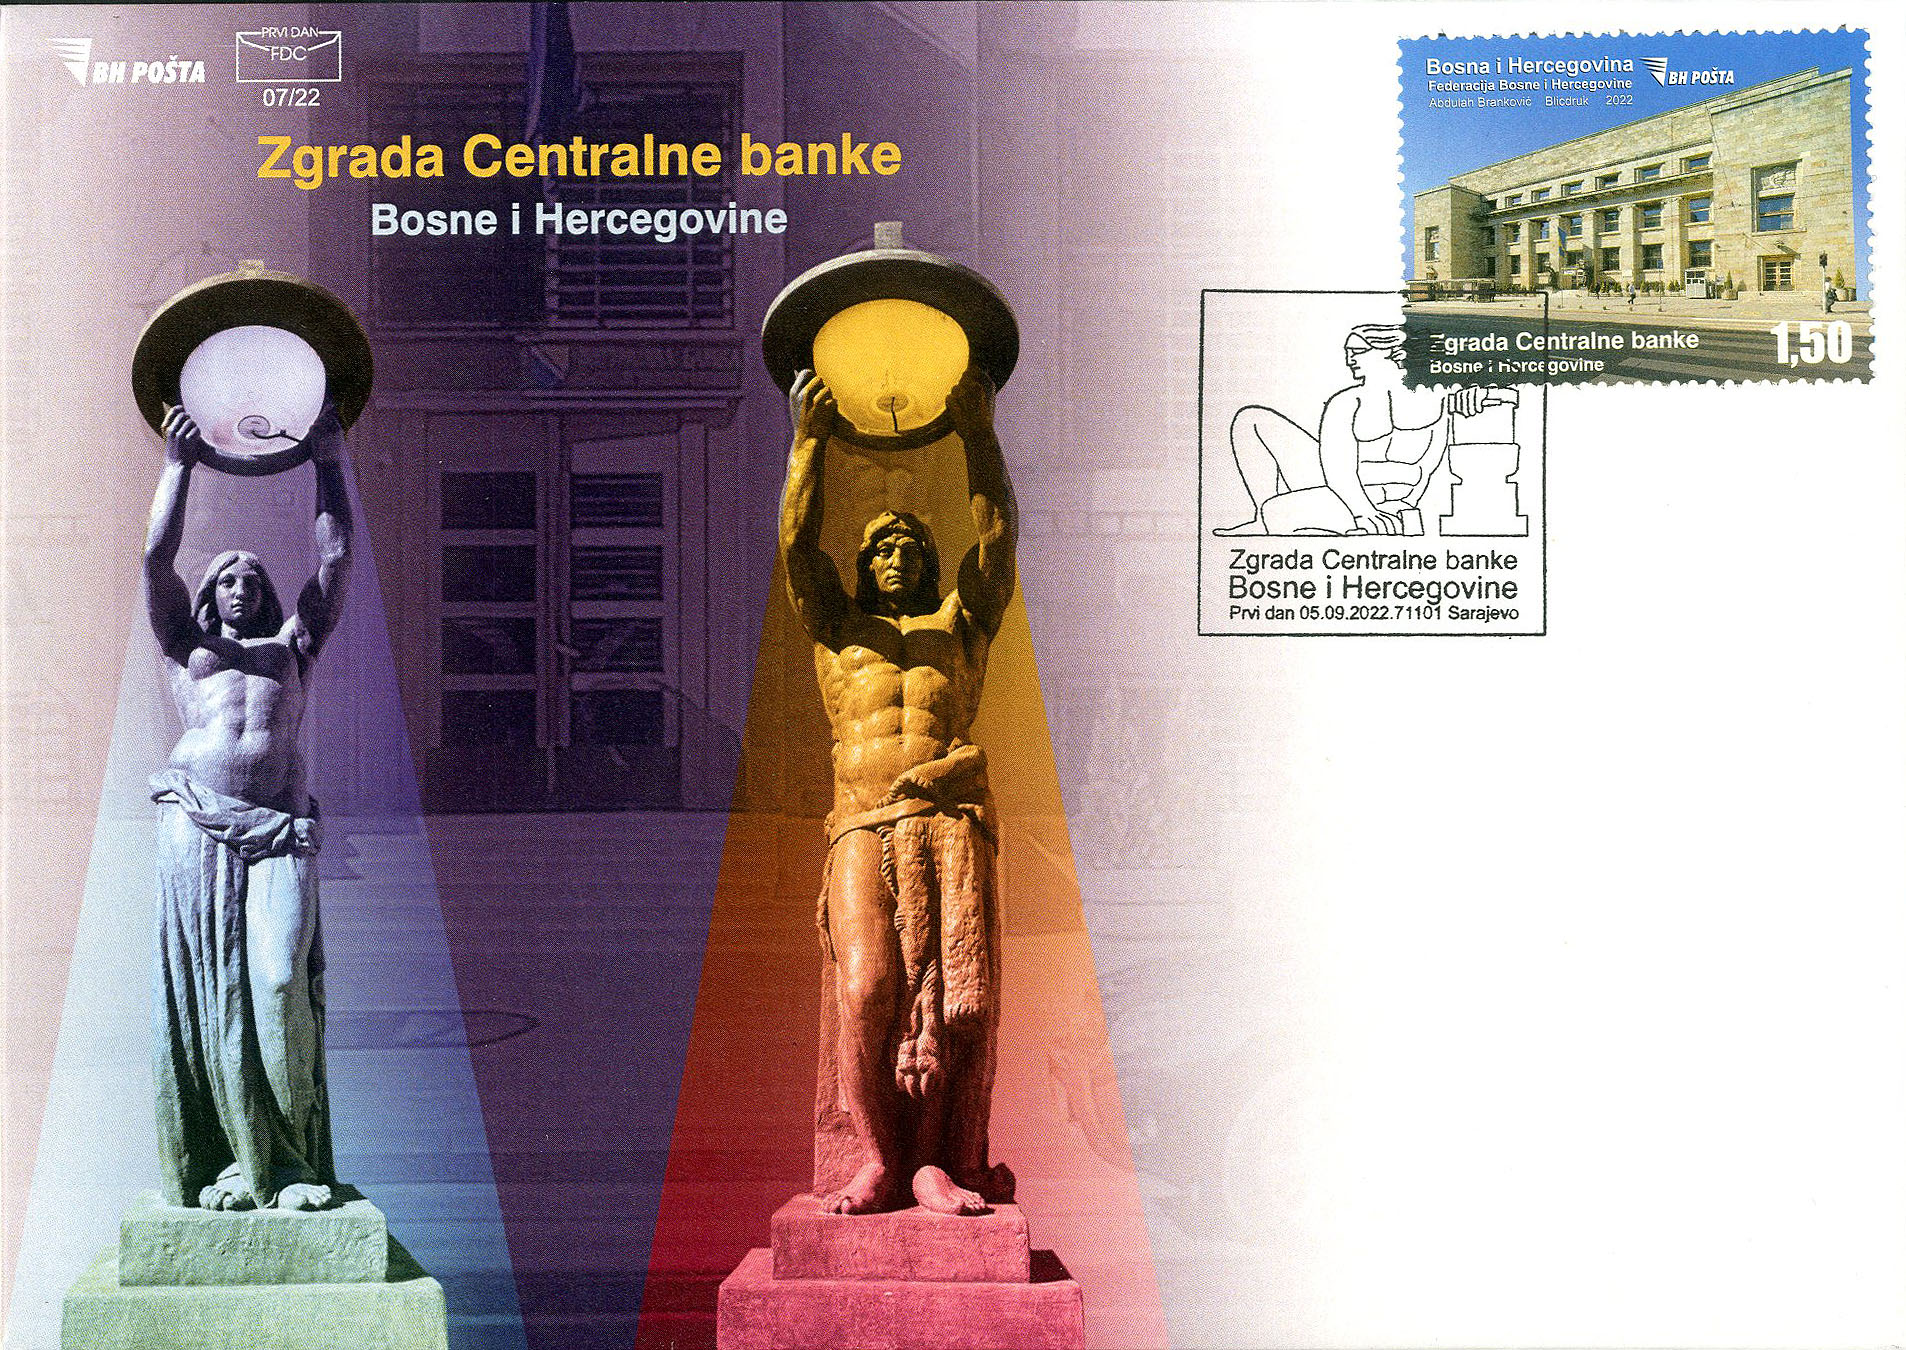 fdc-central-bank-of-bosnia-and-herzegovina-bu